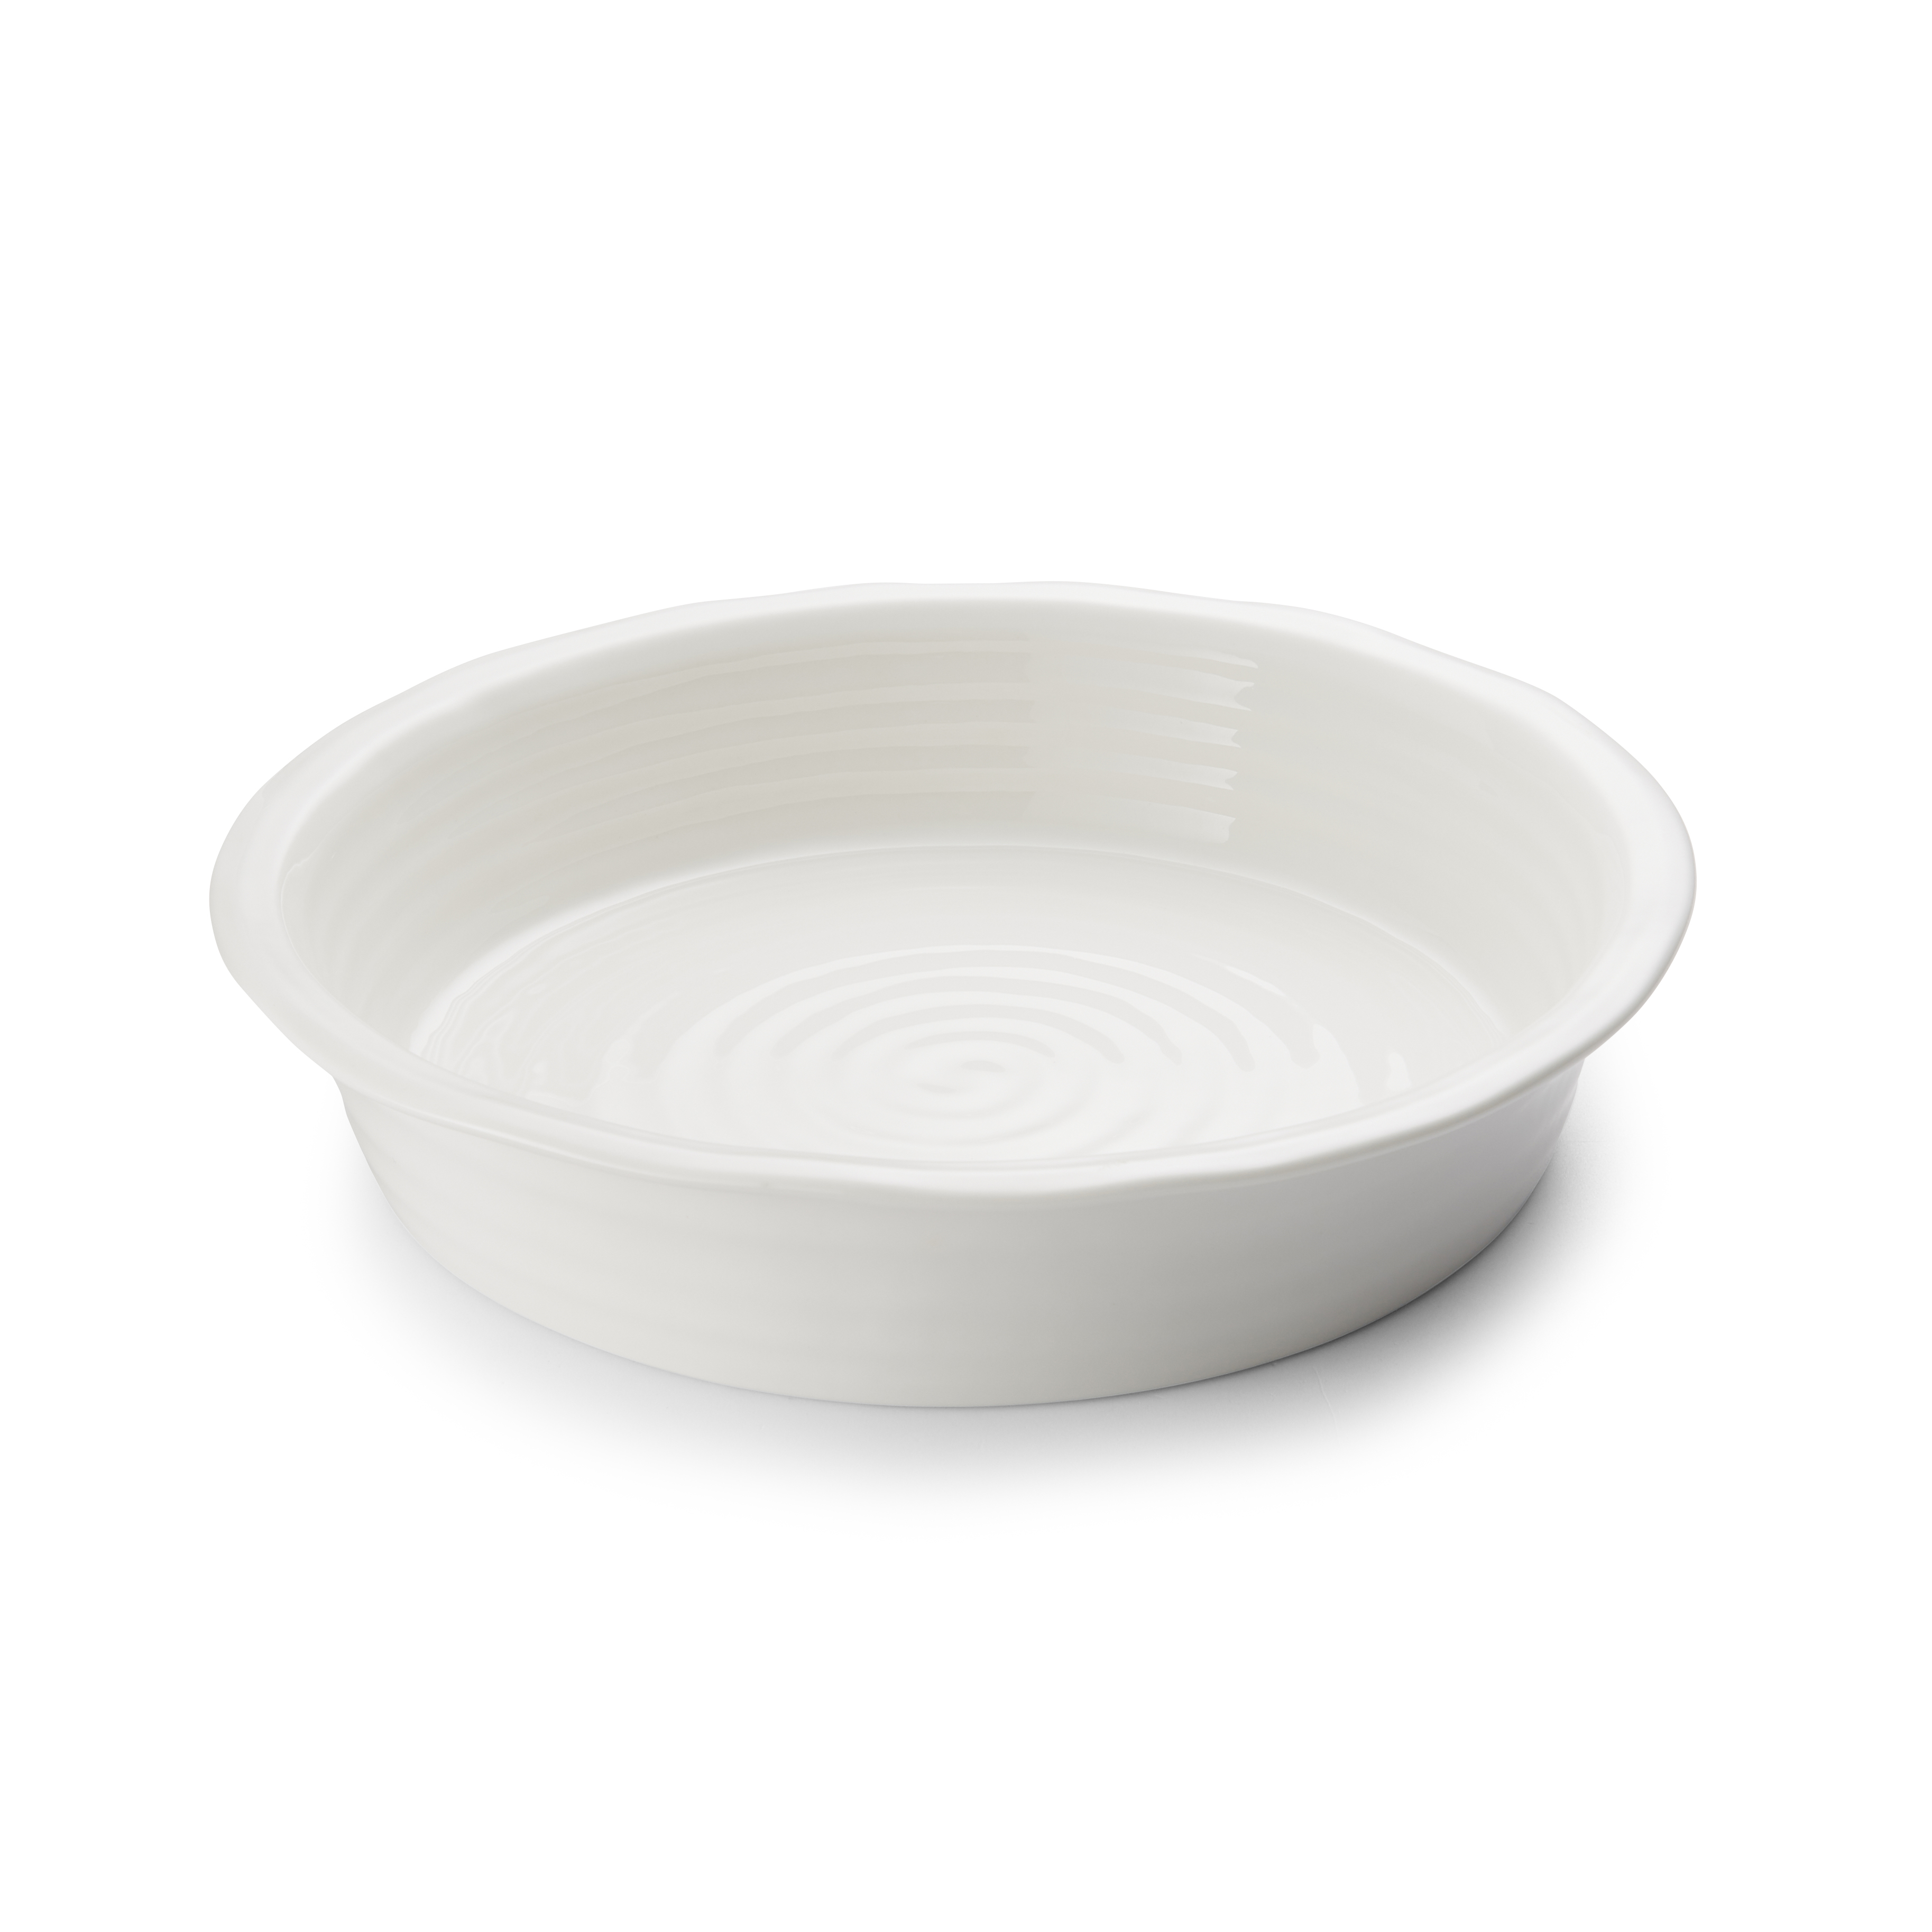 Sophie Conran Round Pie Dish, White image number null